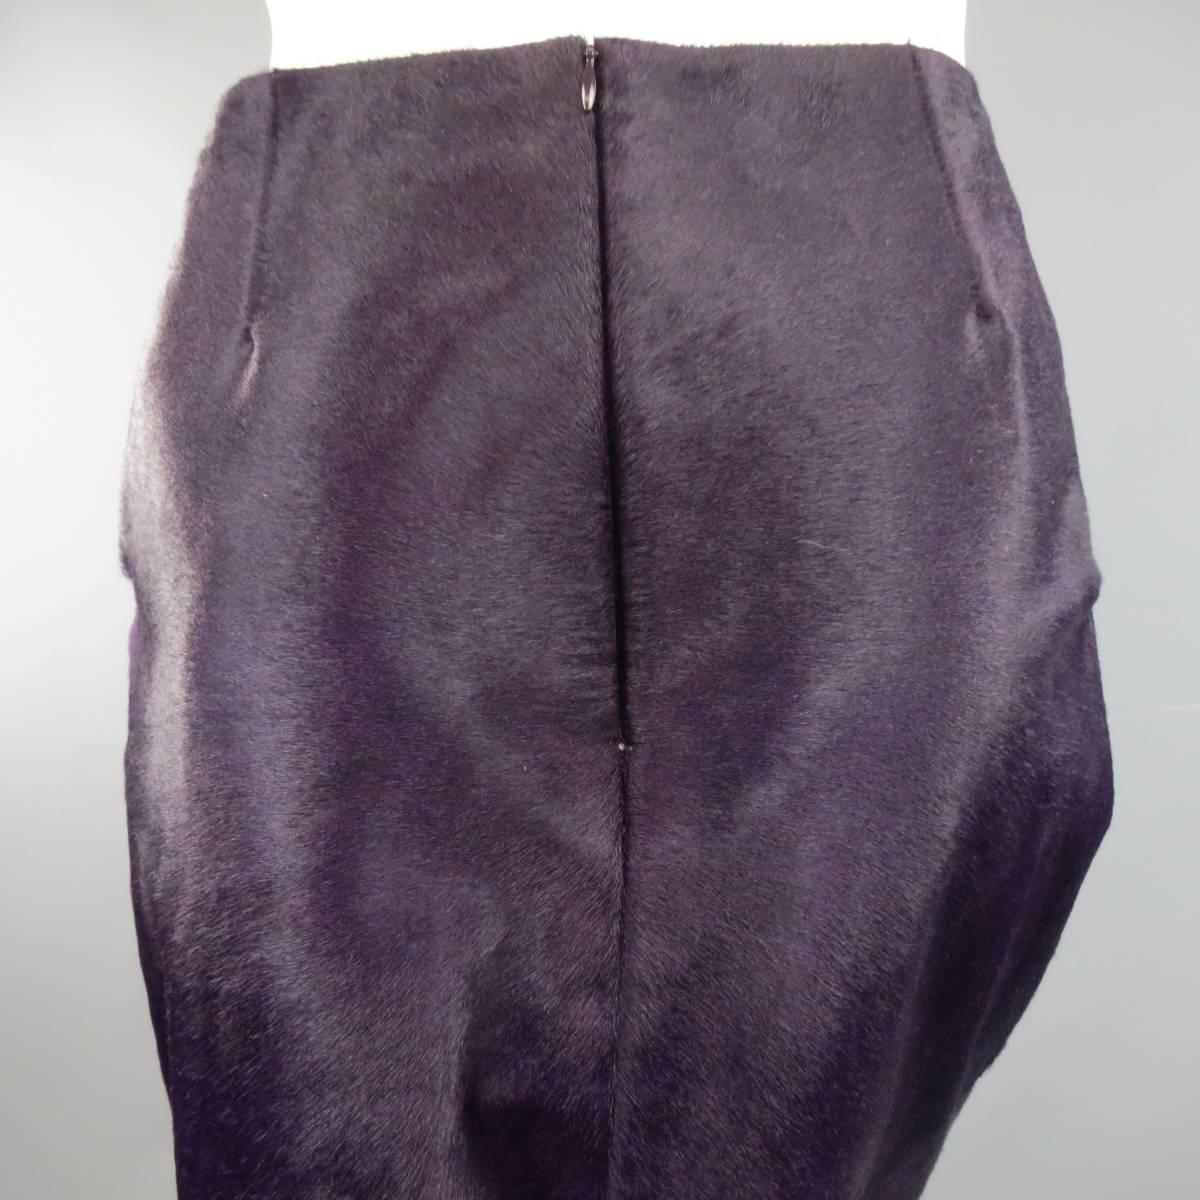 Black PAUL KA Size 8 Purple Calf Hair Slit Pencil Skirt